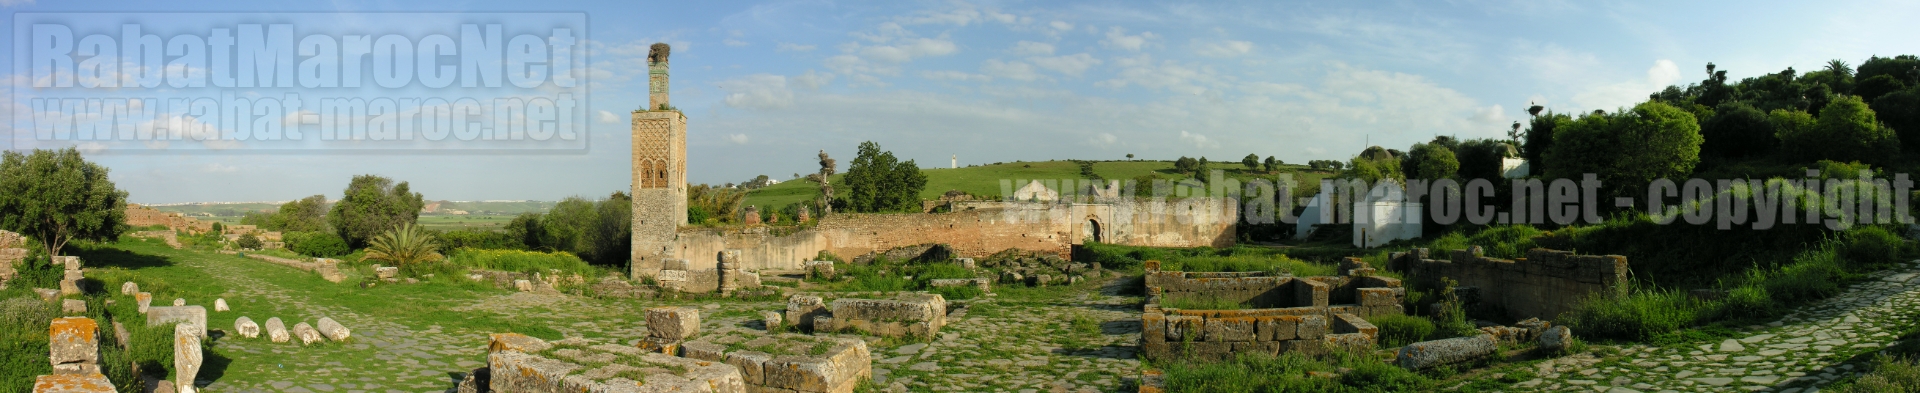 2006 chellah ruines romaines et piliers arc triomphe medersa et marabout